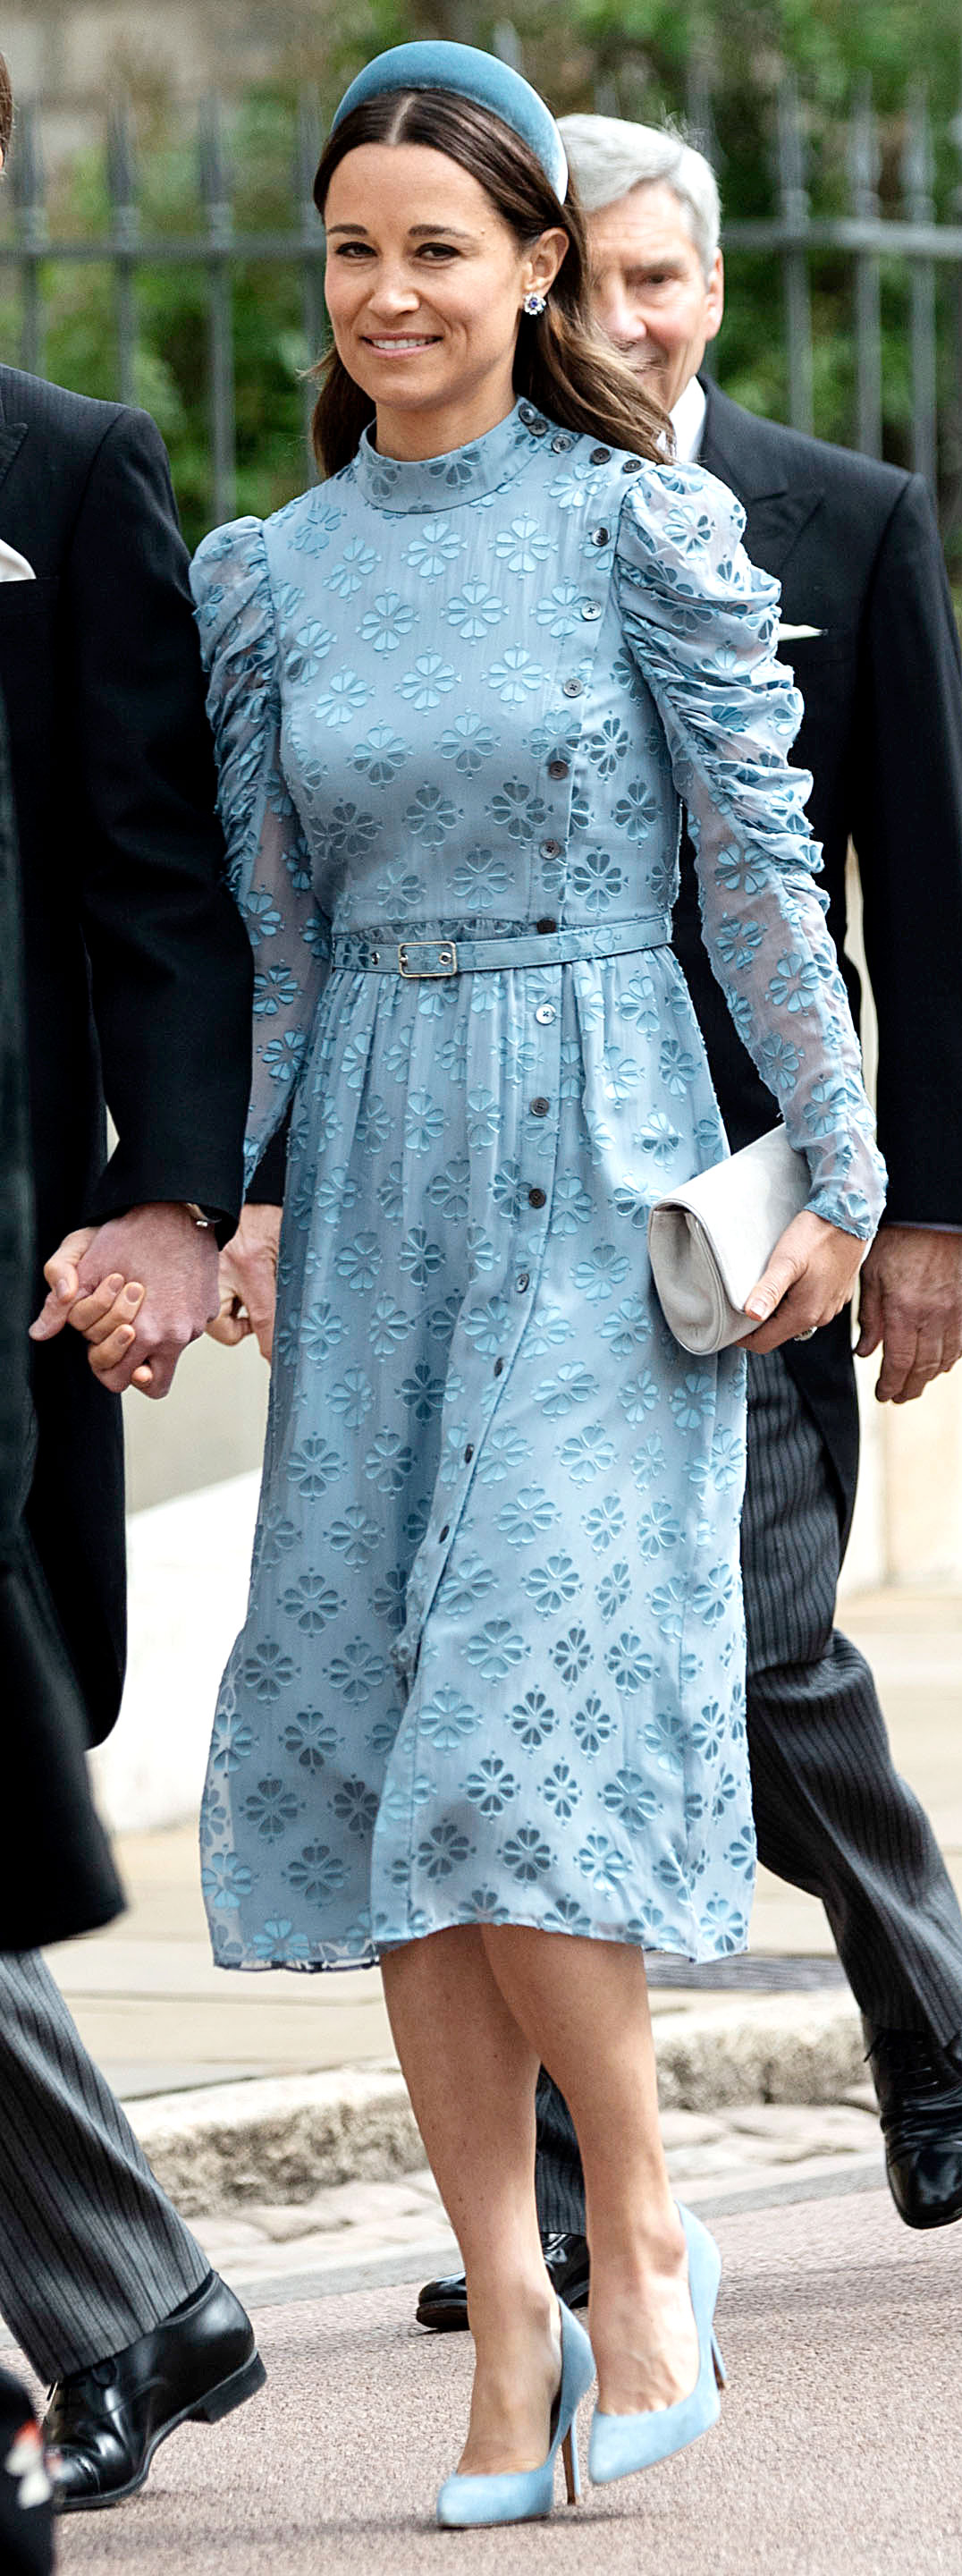 Pippa Middleton Copies Kate Middleton's Style at Wedding: Pics